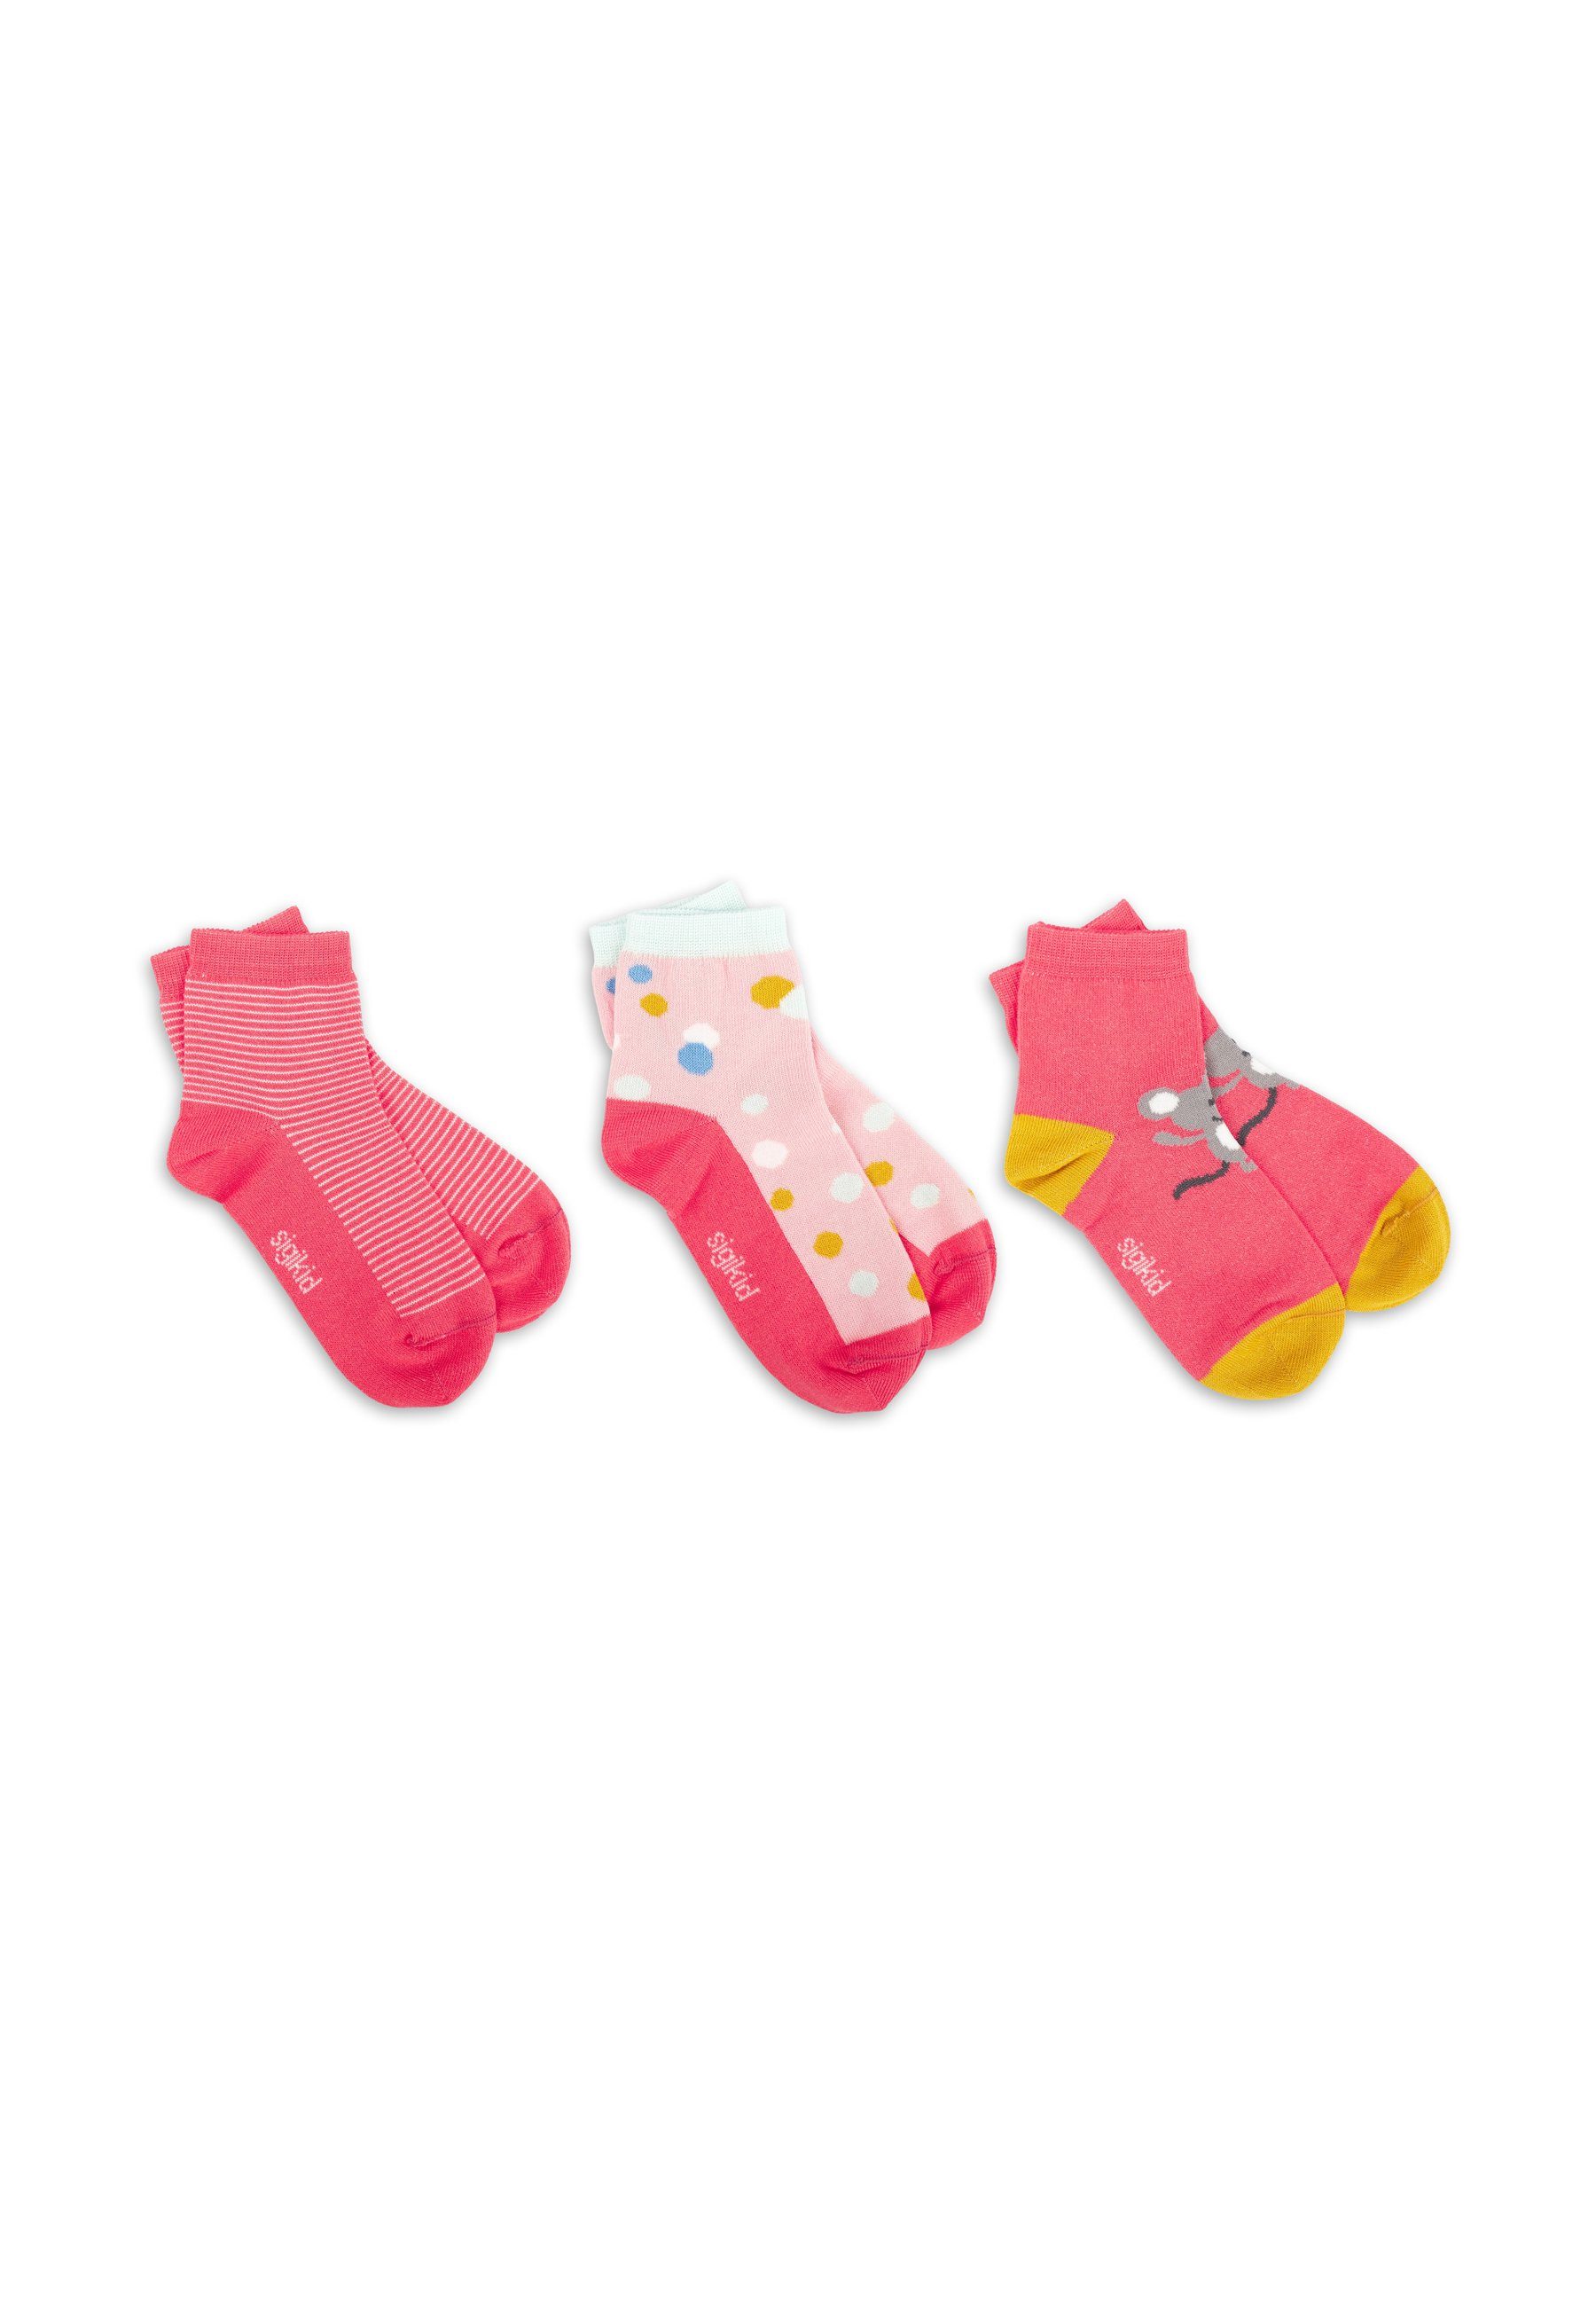 Sigikid Socken Kindersocken Set mit 3 Paar Socken (3-Paar) pink/rosa